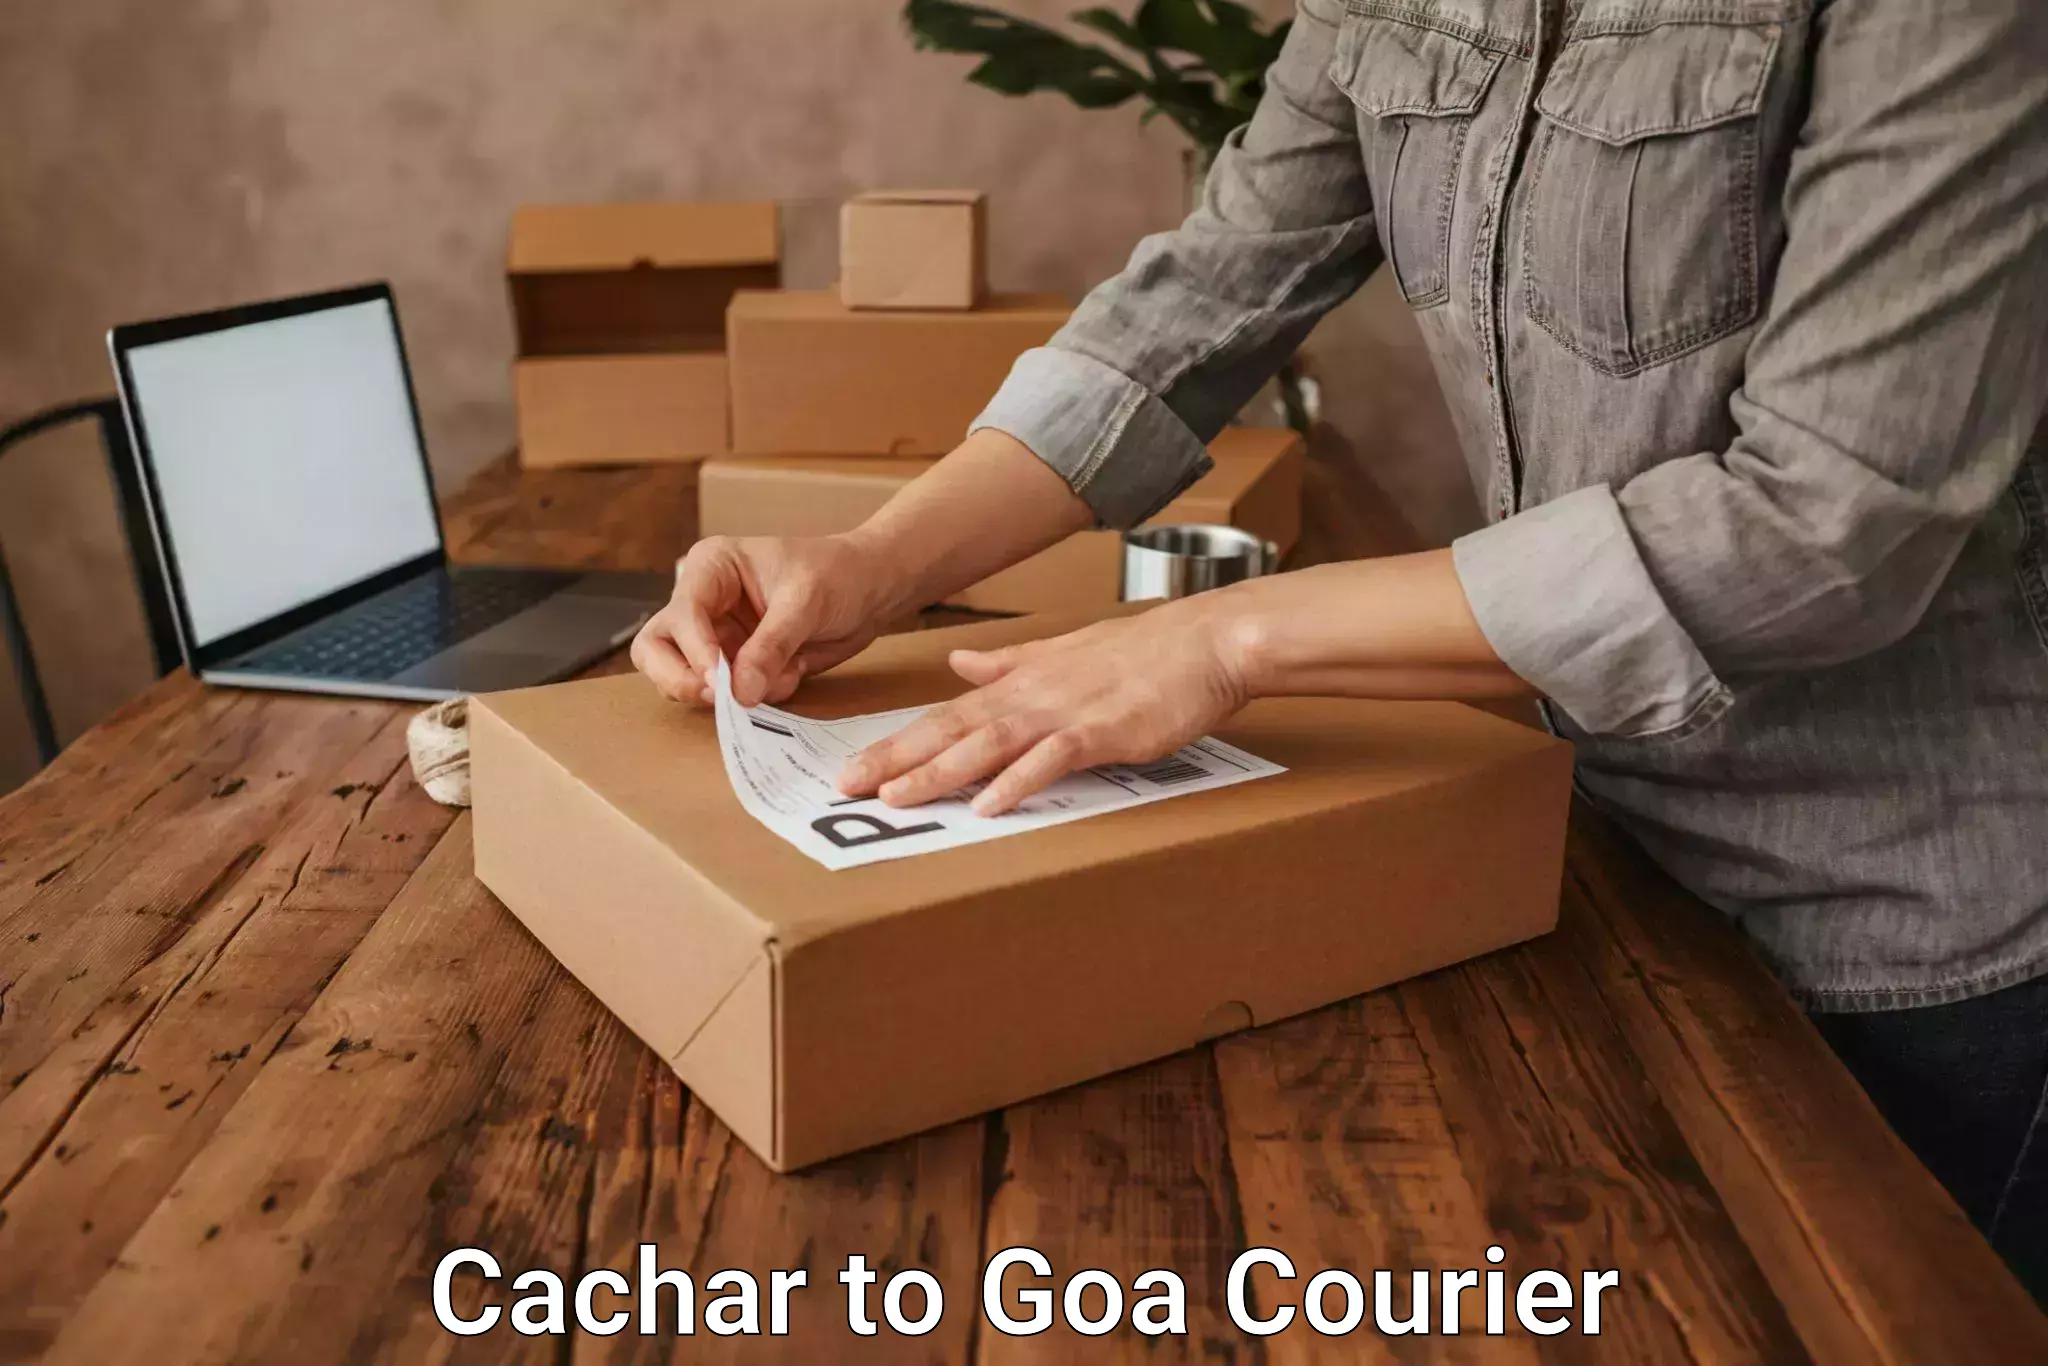 Quick dispatch service Cachar to Goa